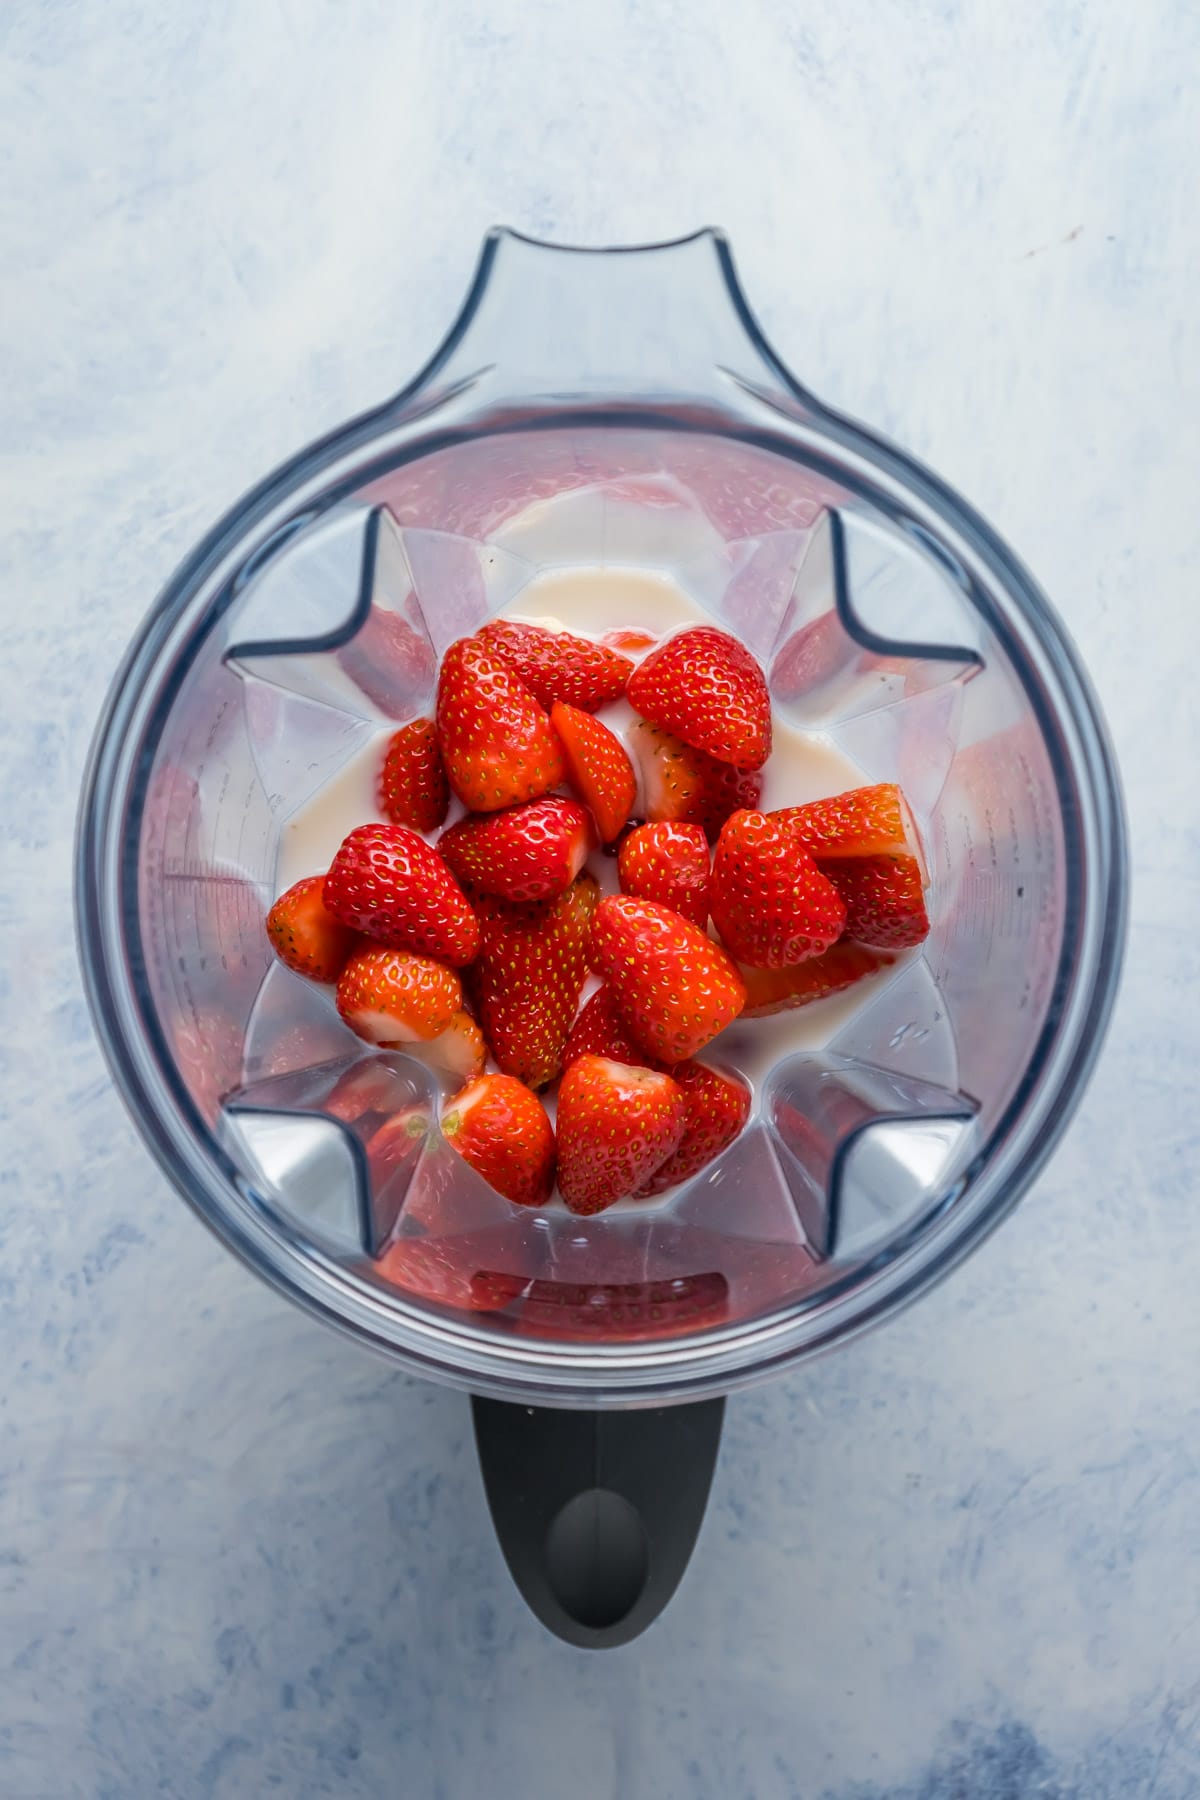 Ingredients for strawberry smoothie in a blender jug.